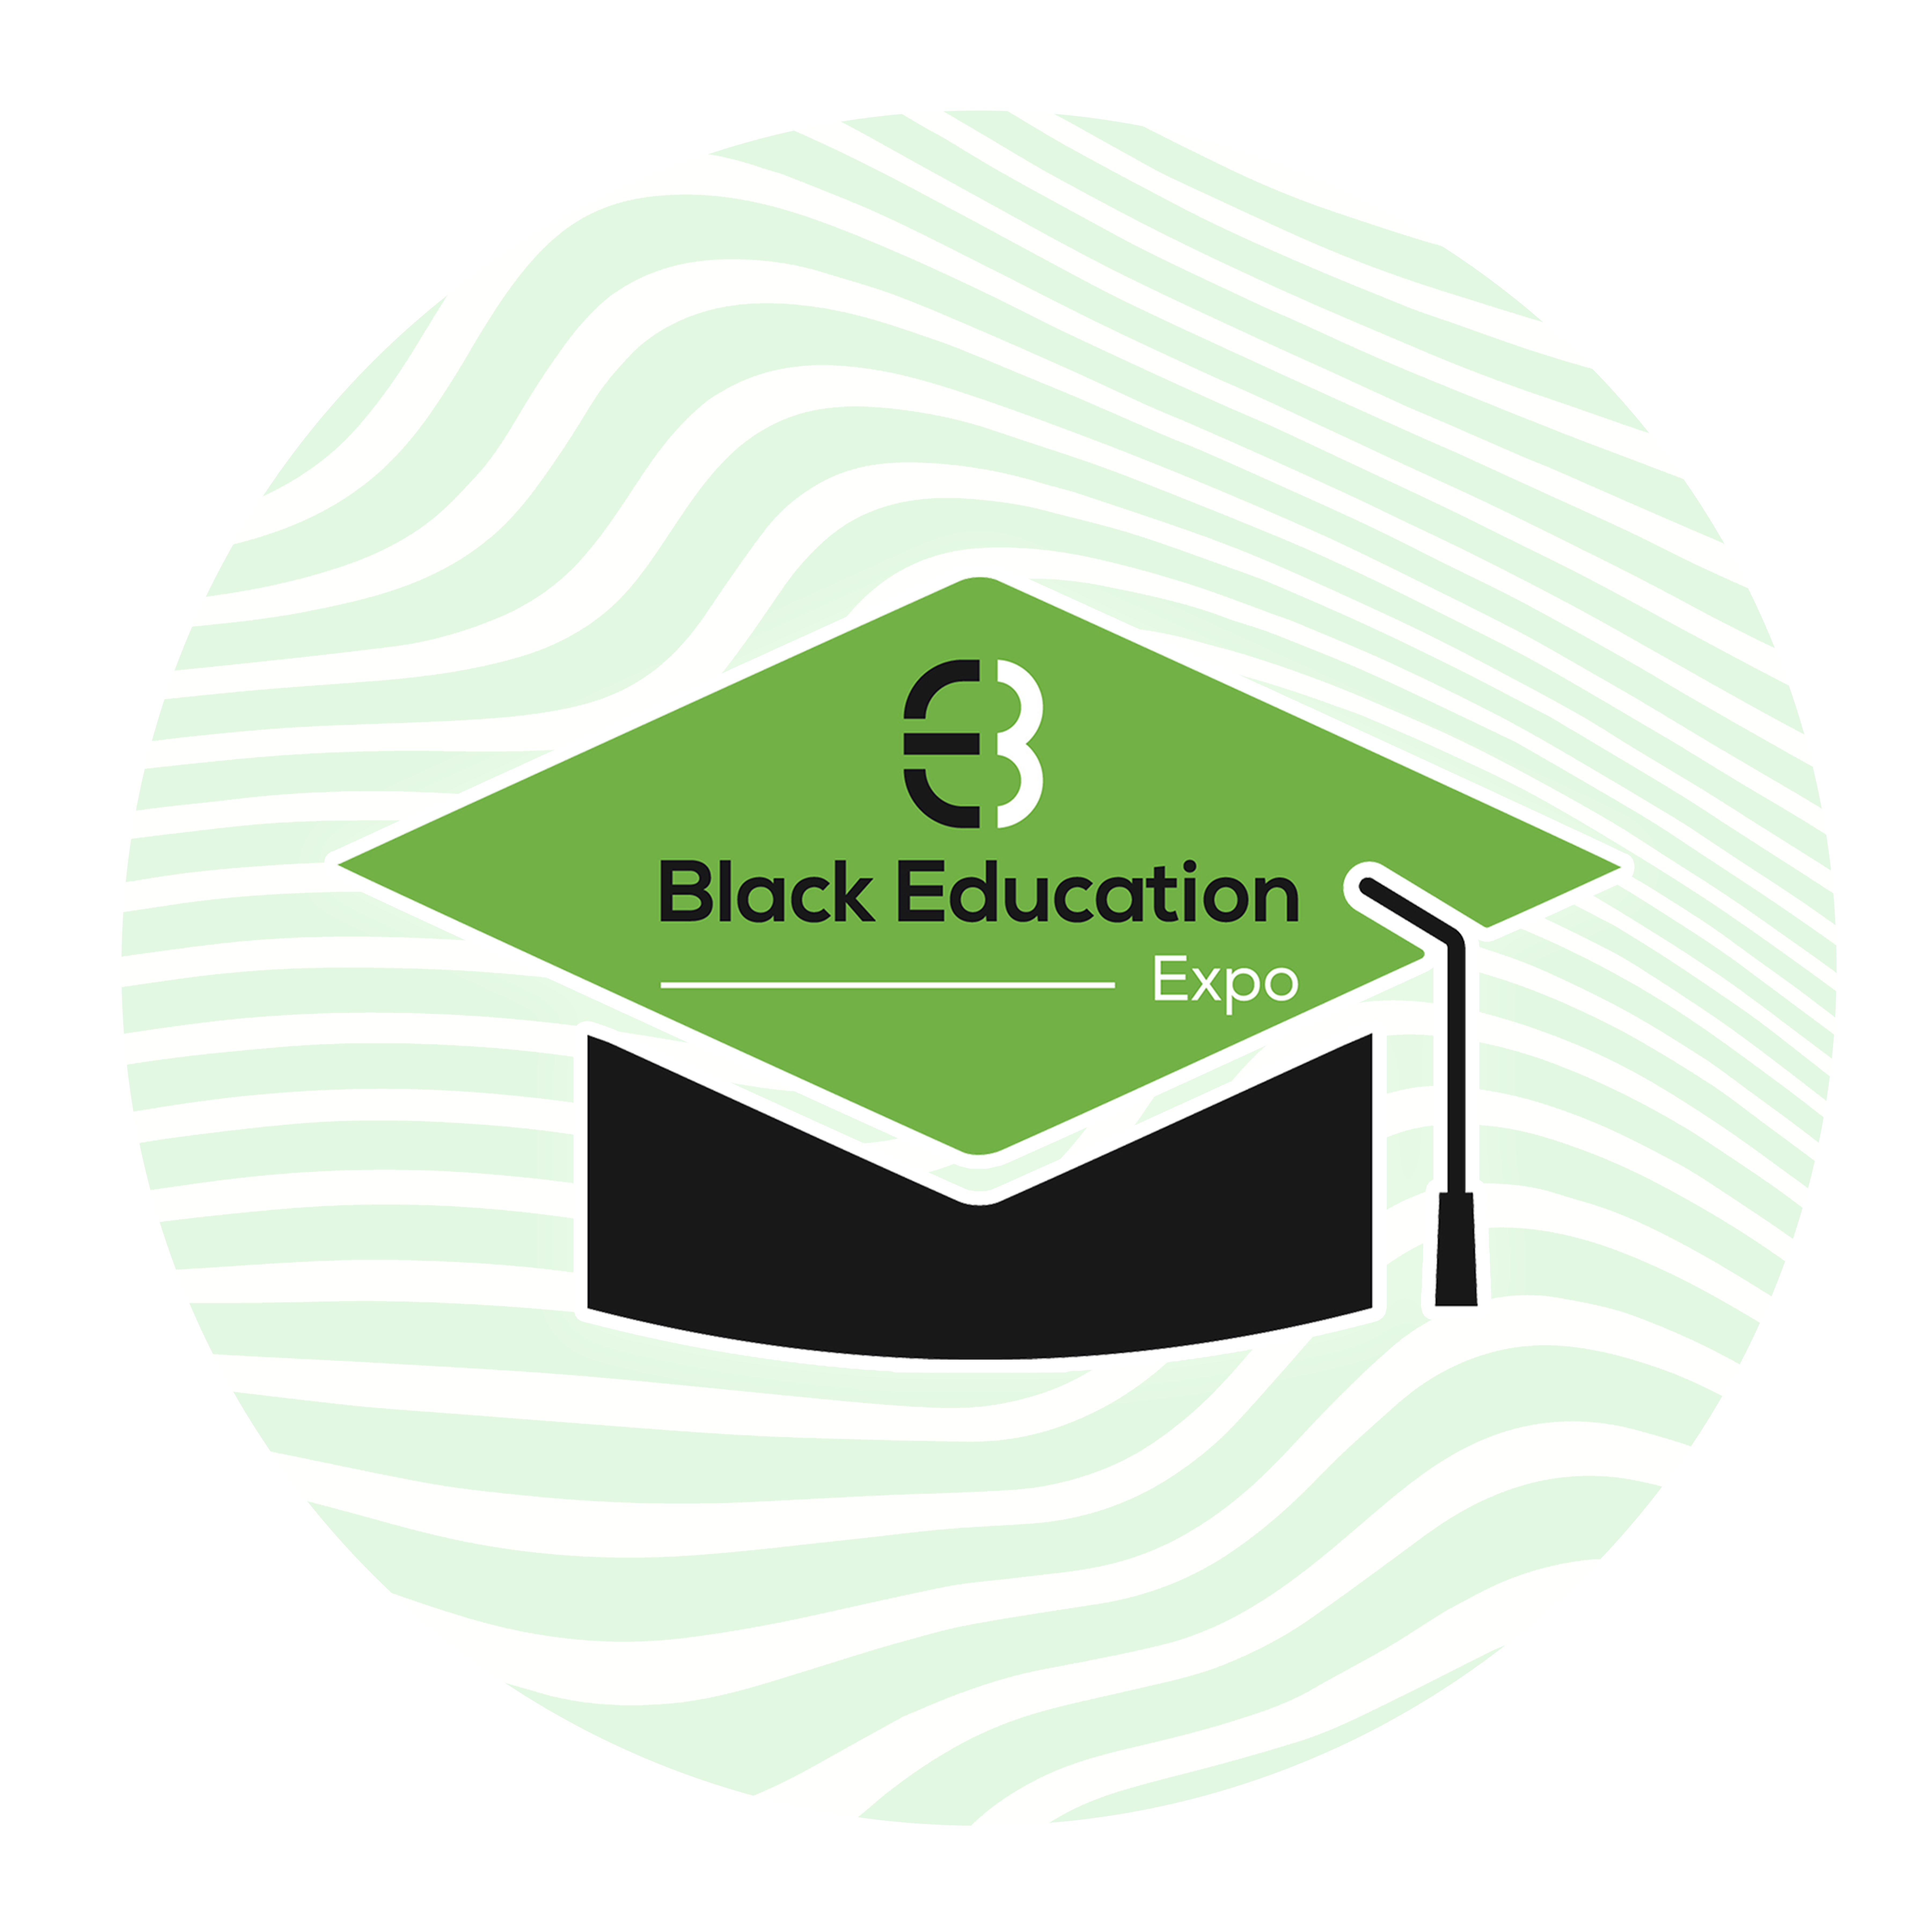 Black Education Expo